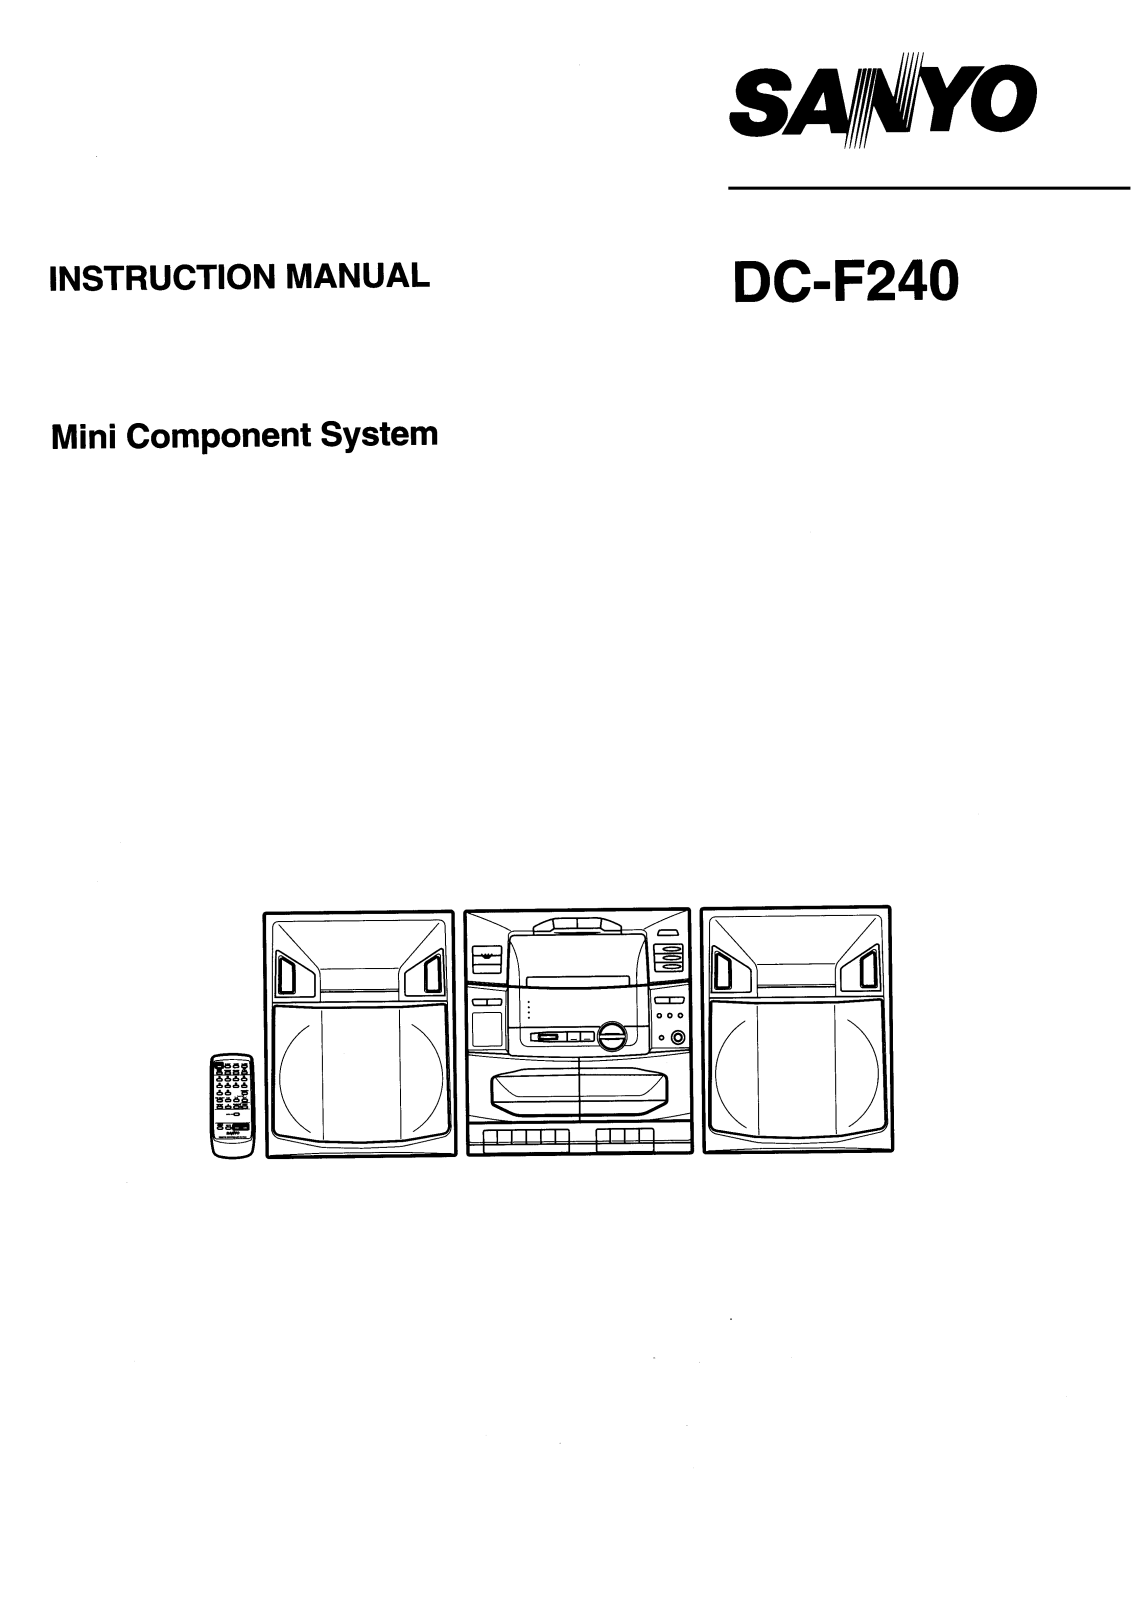 Sanyo DC-F240 Instruction Manual